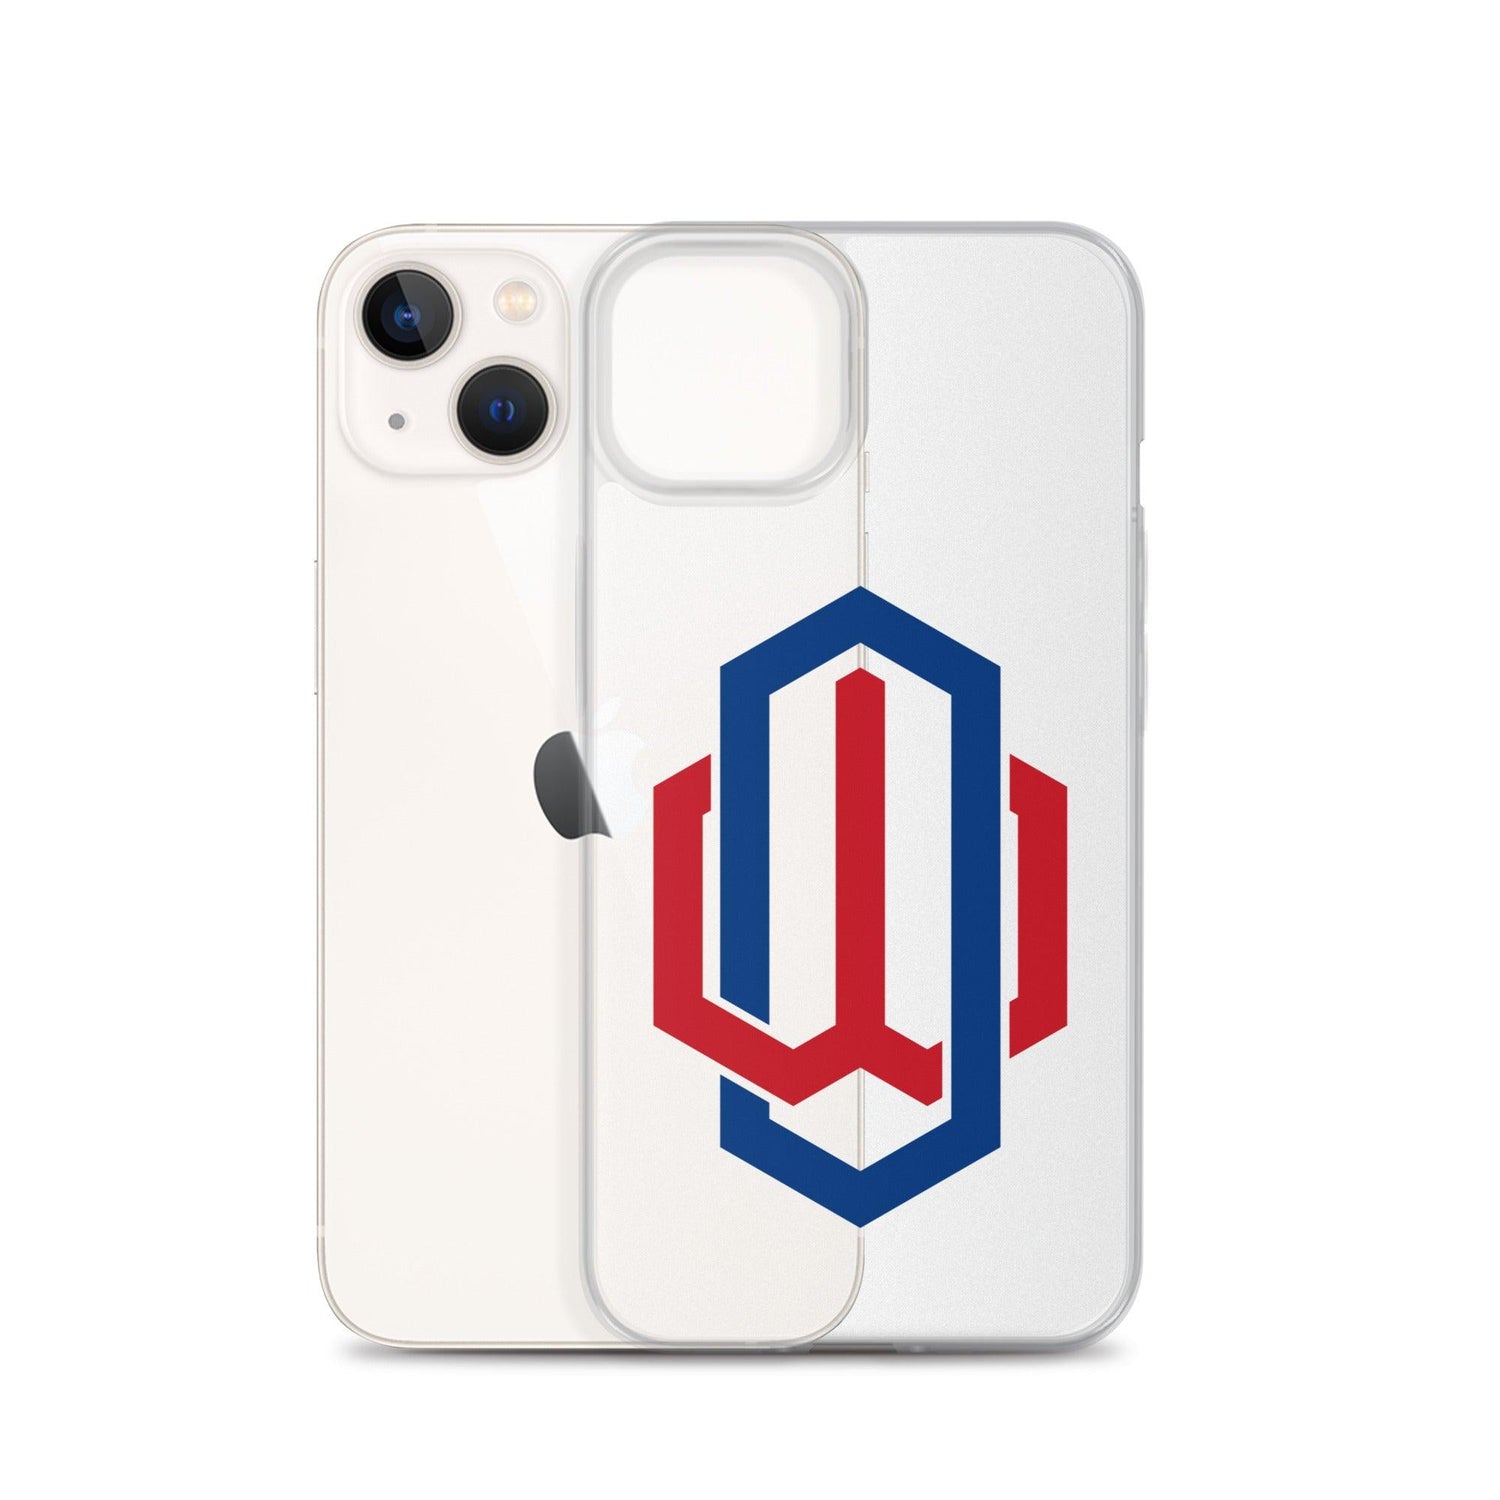 Owen White “OW” iPhone Case - Fan Arch